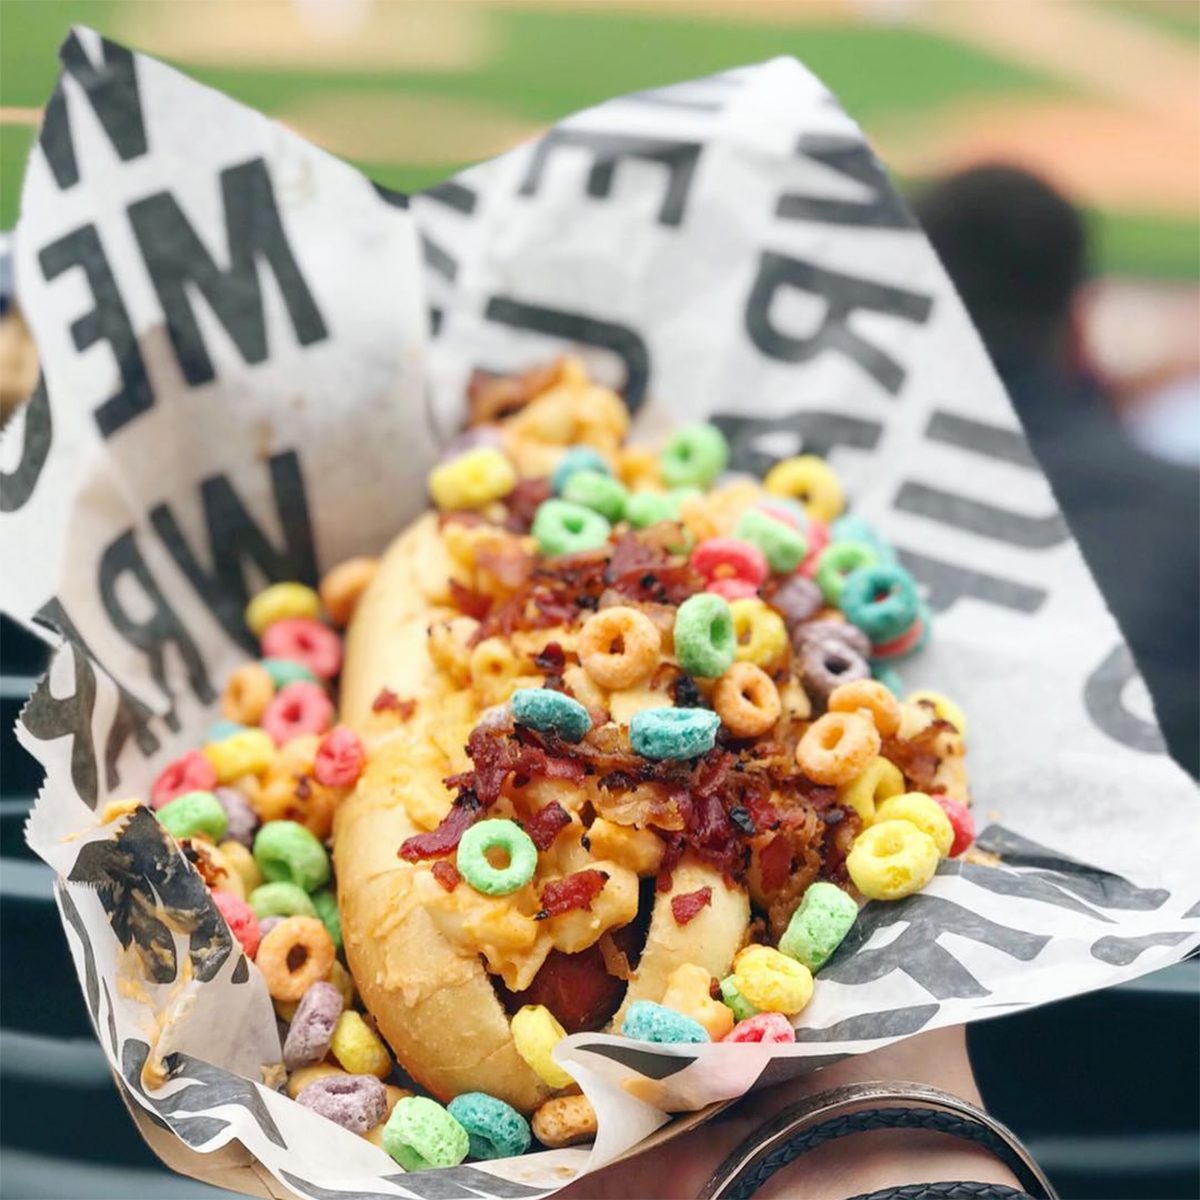 kassette tweet Kurv 14 Crazy Foods You Can Buy at Major League Ballparks